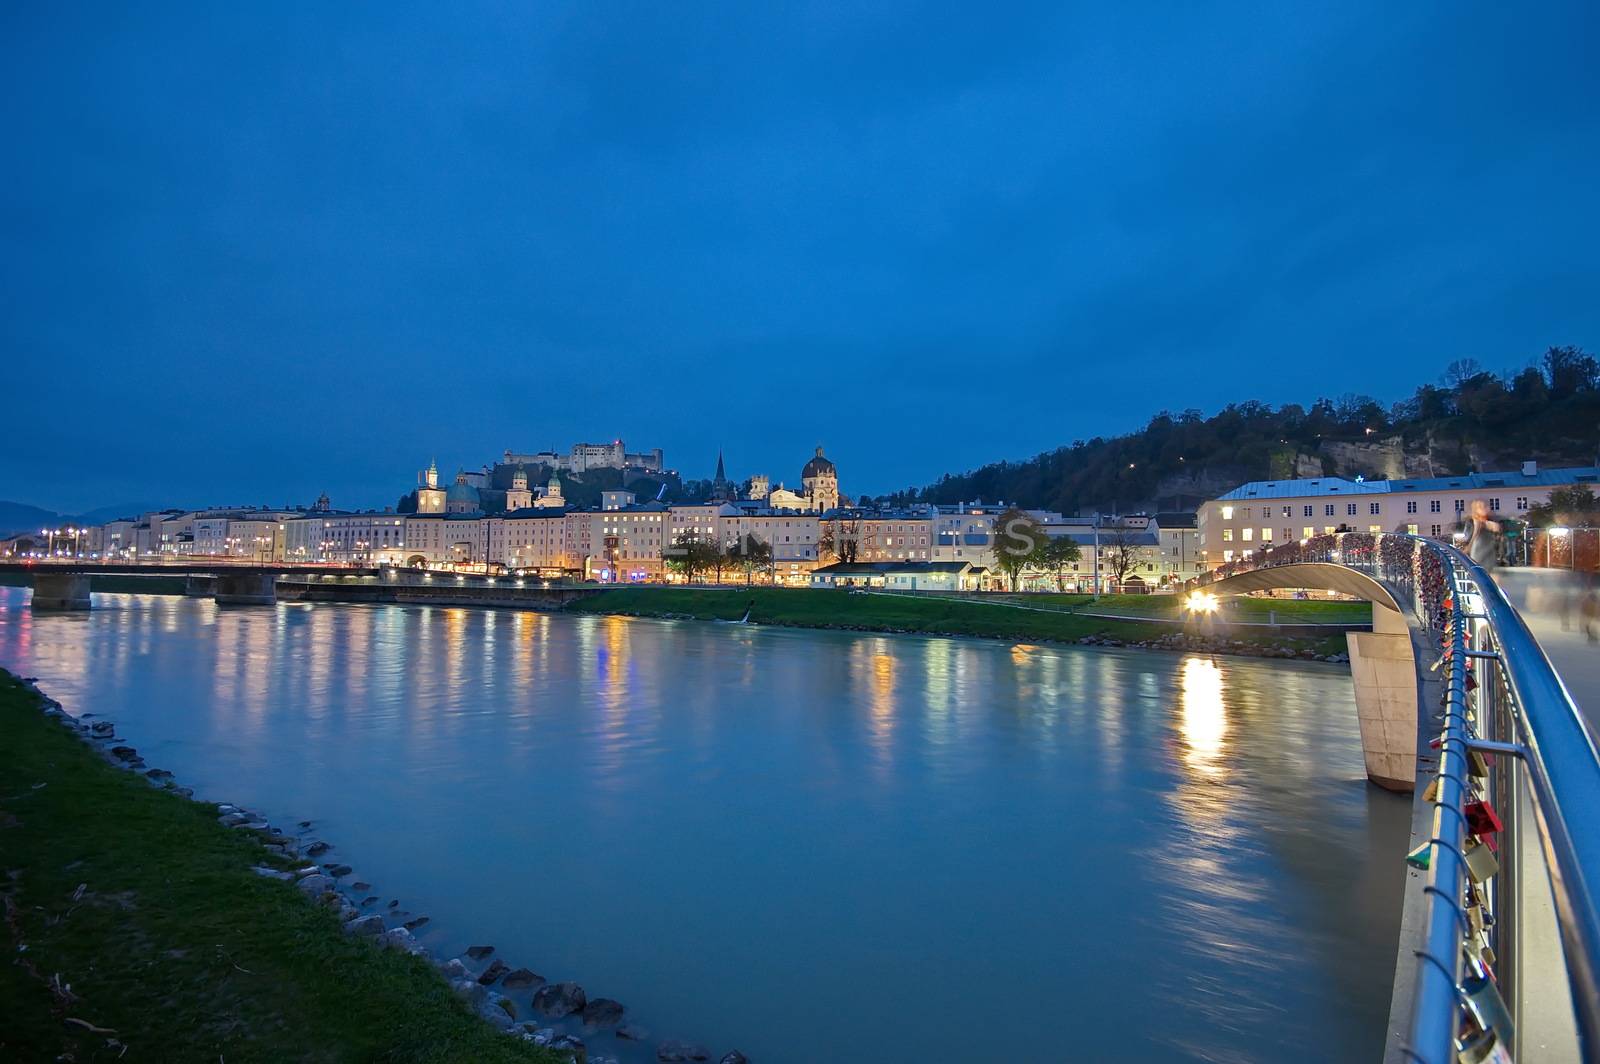 Salzburg at night, Austria by anderm